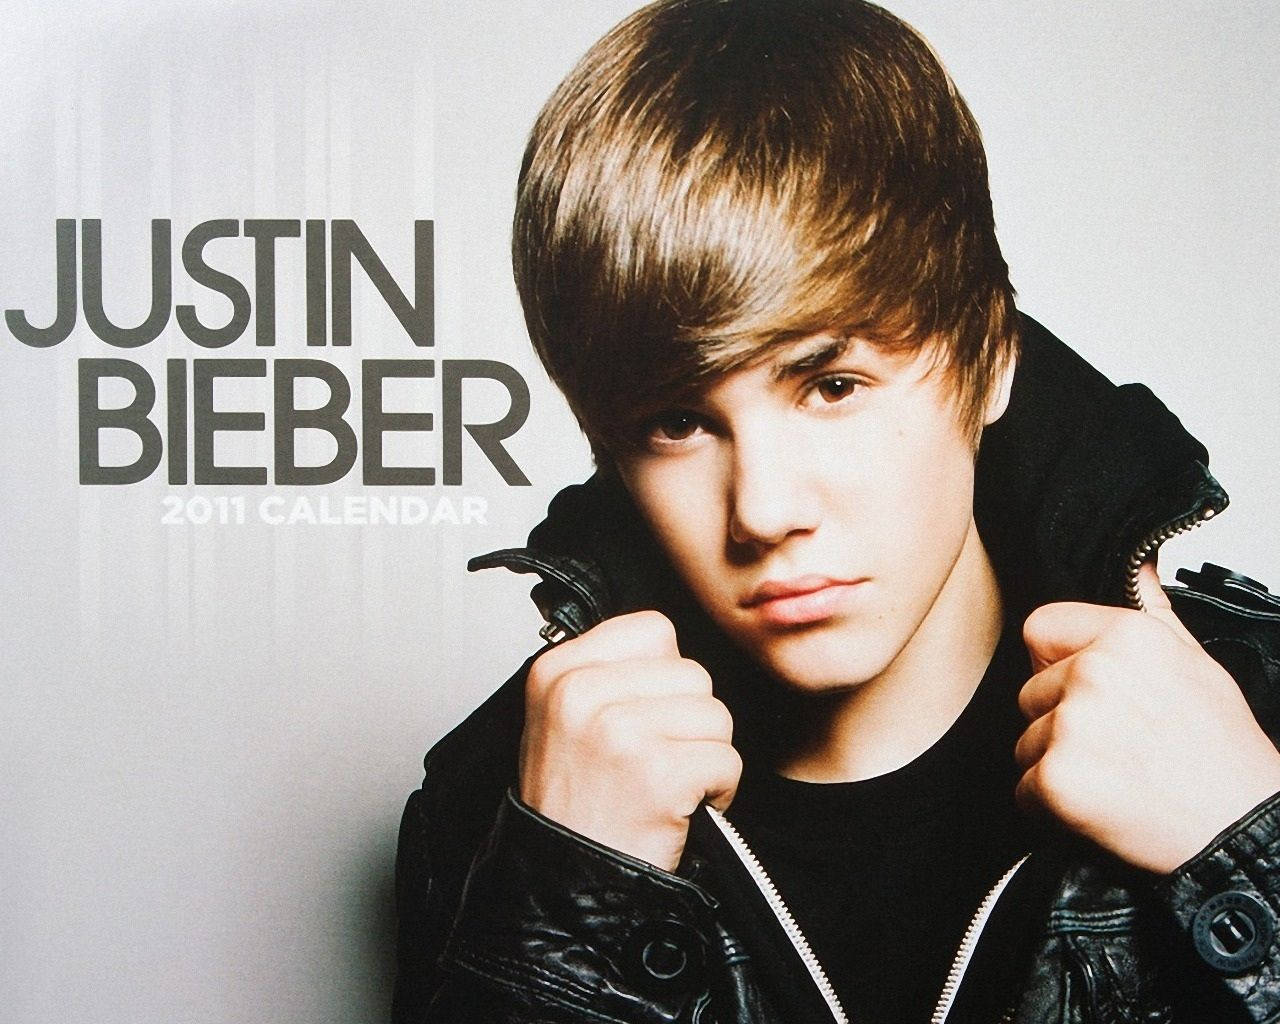 Justin Bieber 2011 Calendar Cover Background